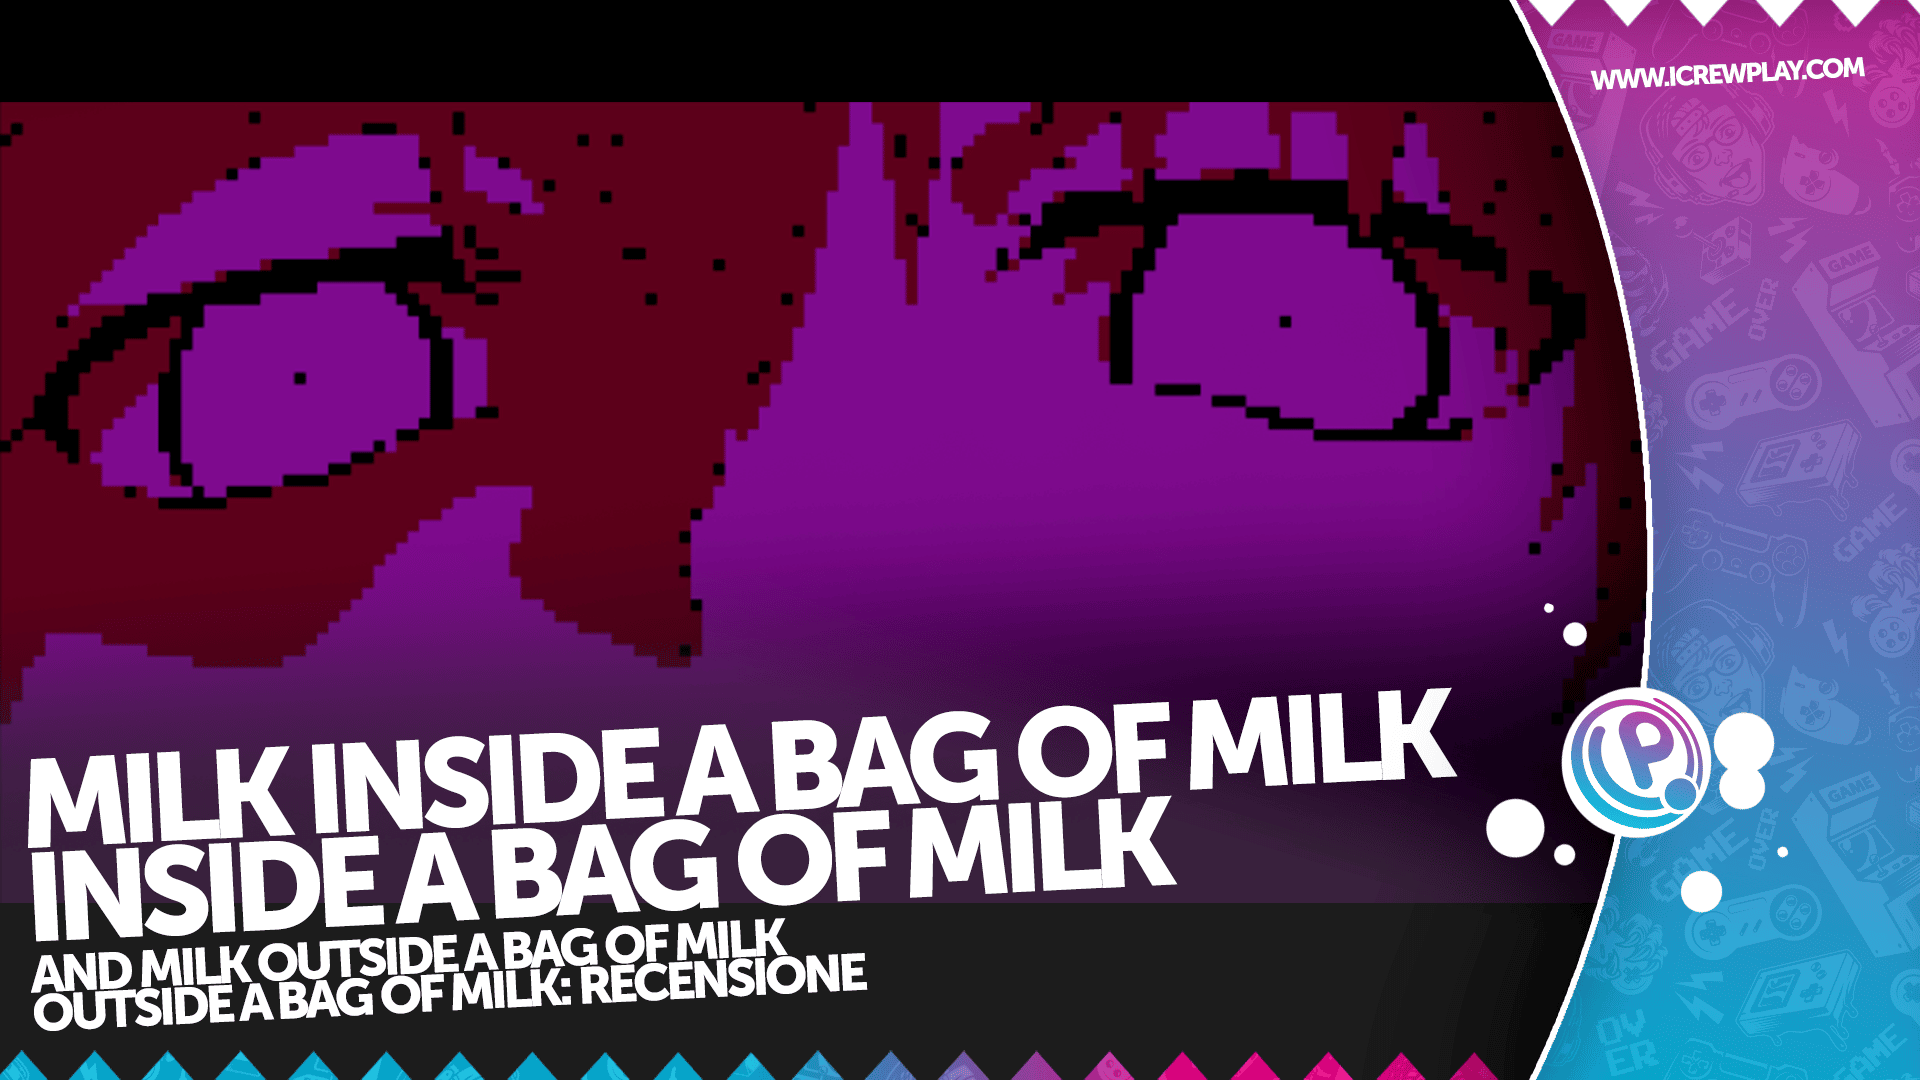 Milk inside a bag of milk inside a bag of milk and Milk outside a bag of milk outside a bag of milk: recensione per Nintendo Switch 12